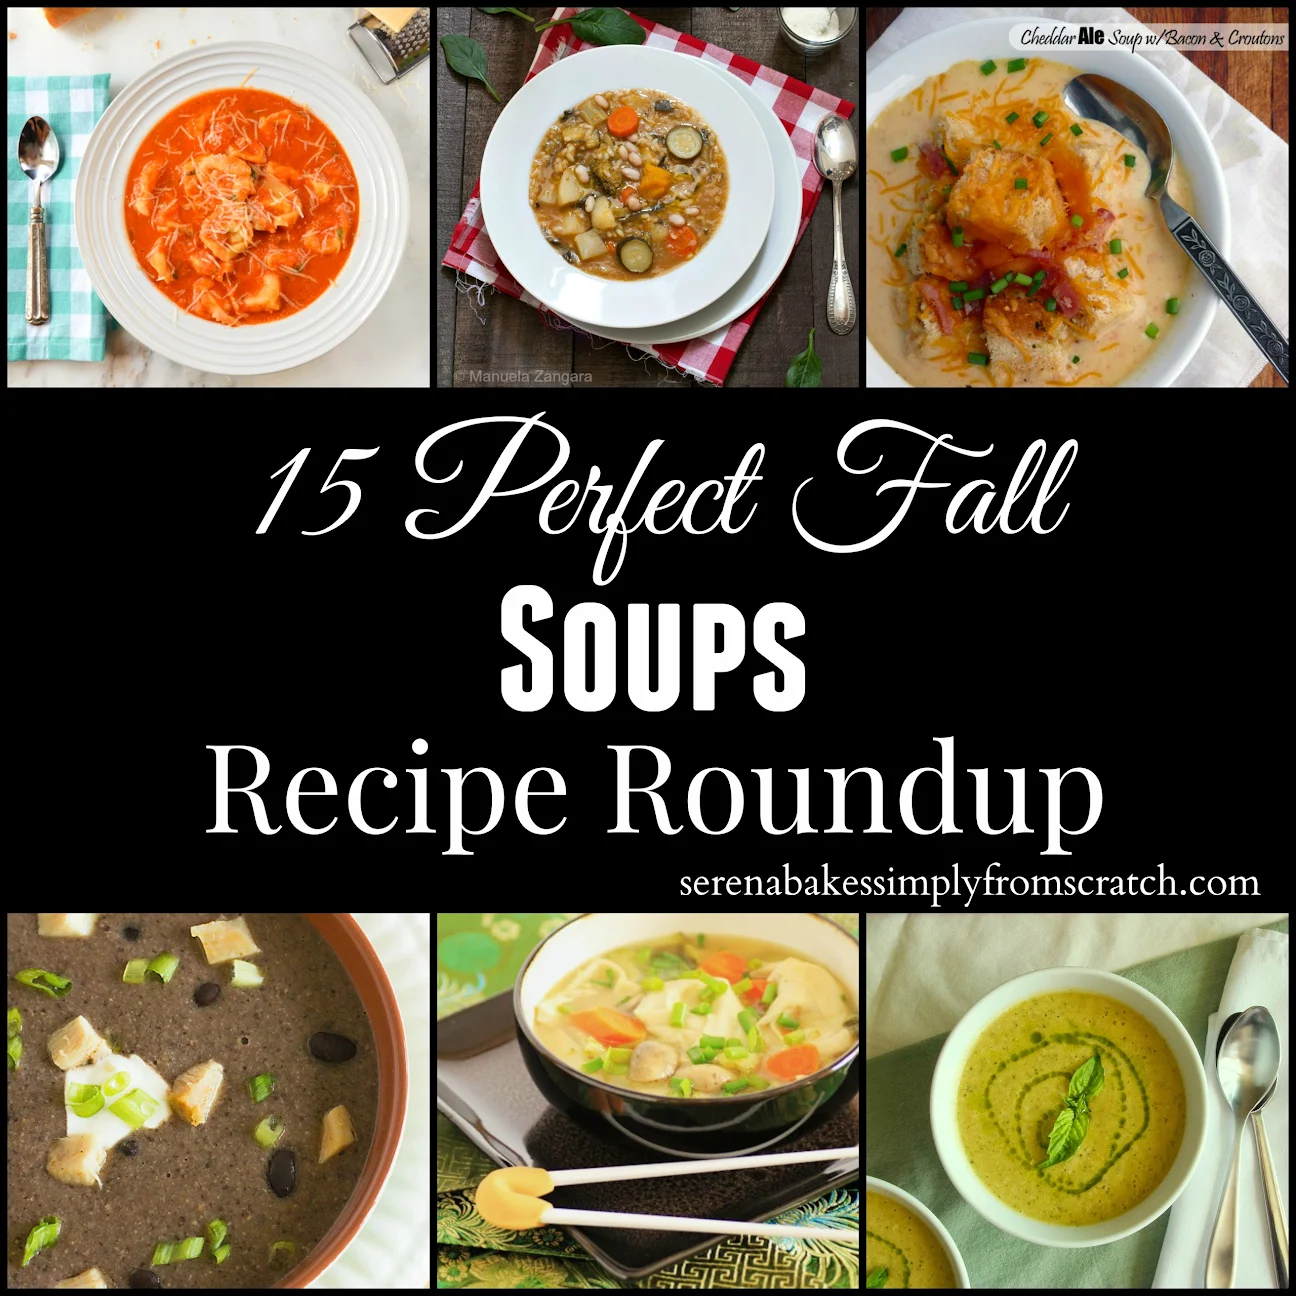 15 Perfect Fall Soups Recipe Roundup